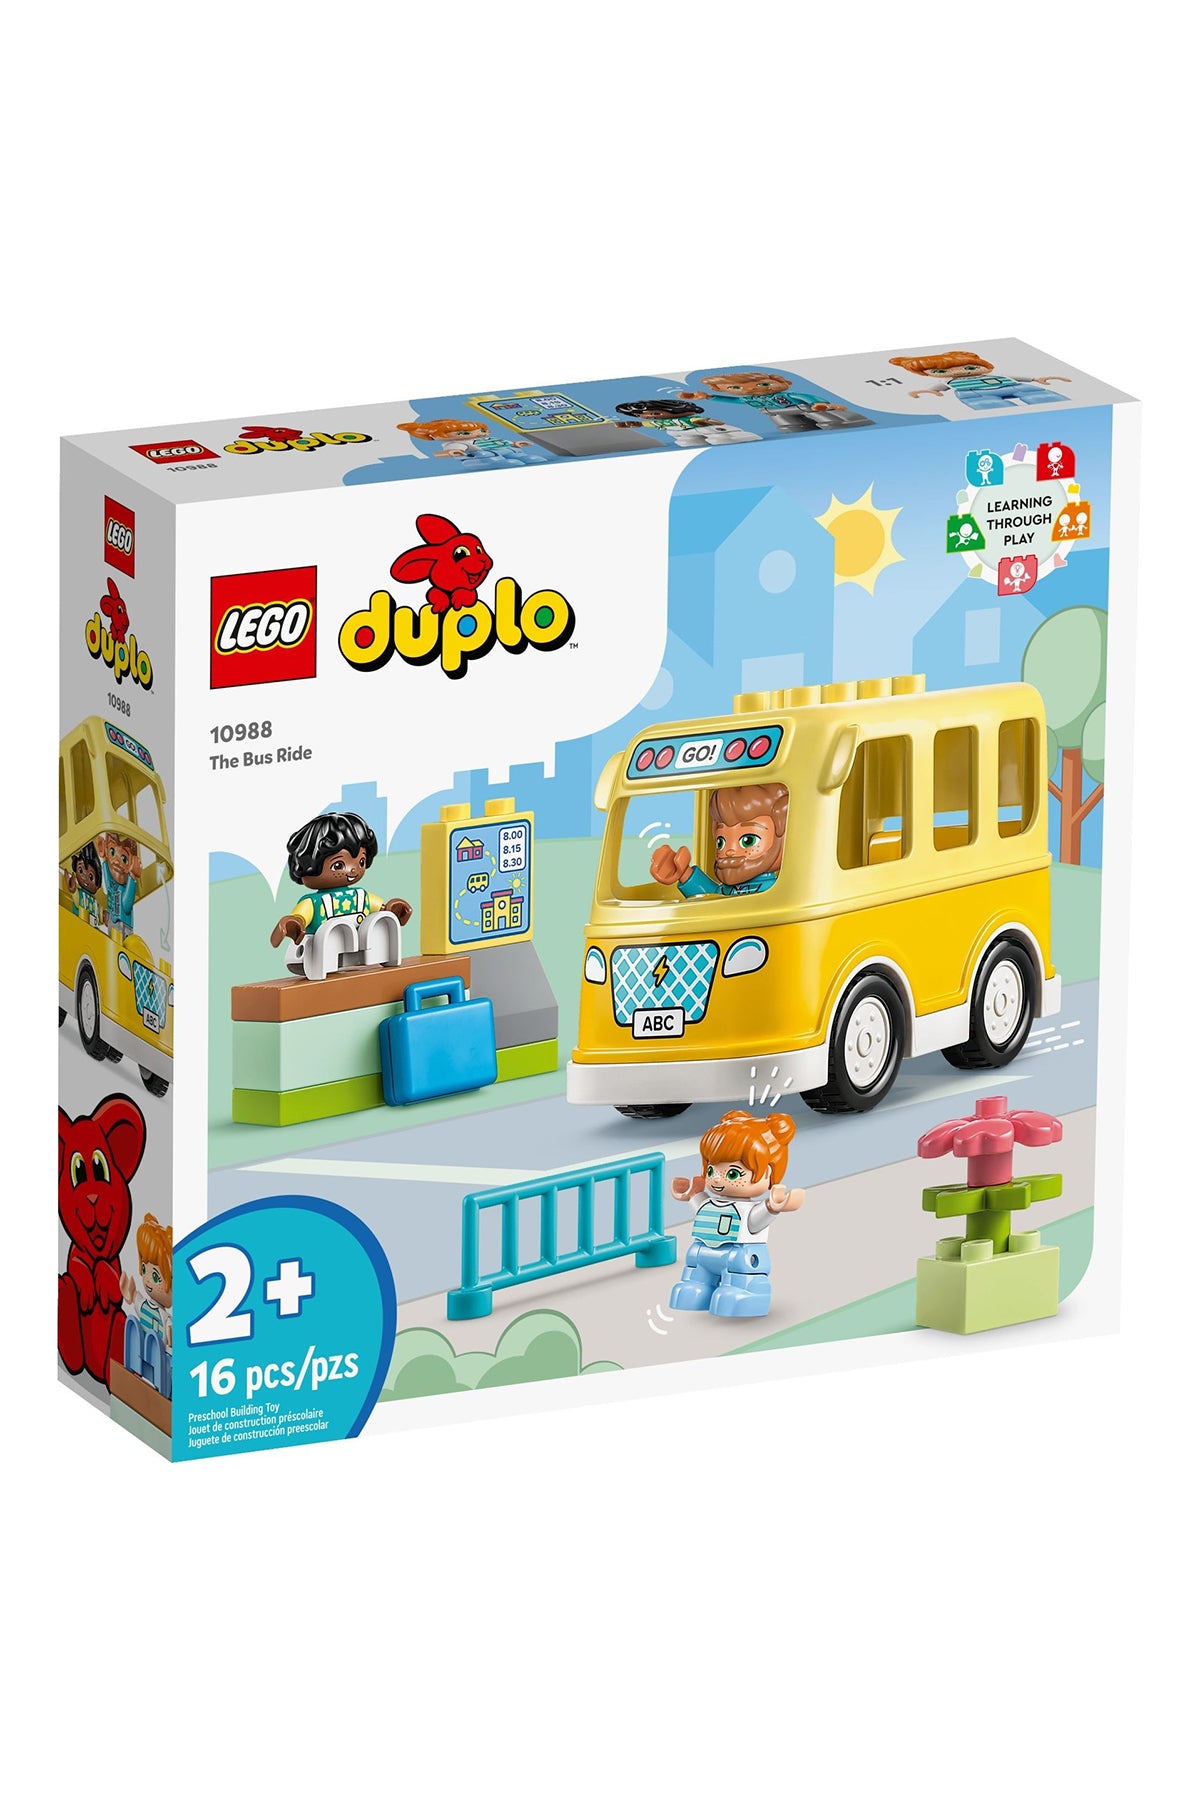 Lego Duplo : The Bus Ride